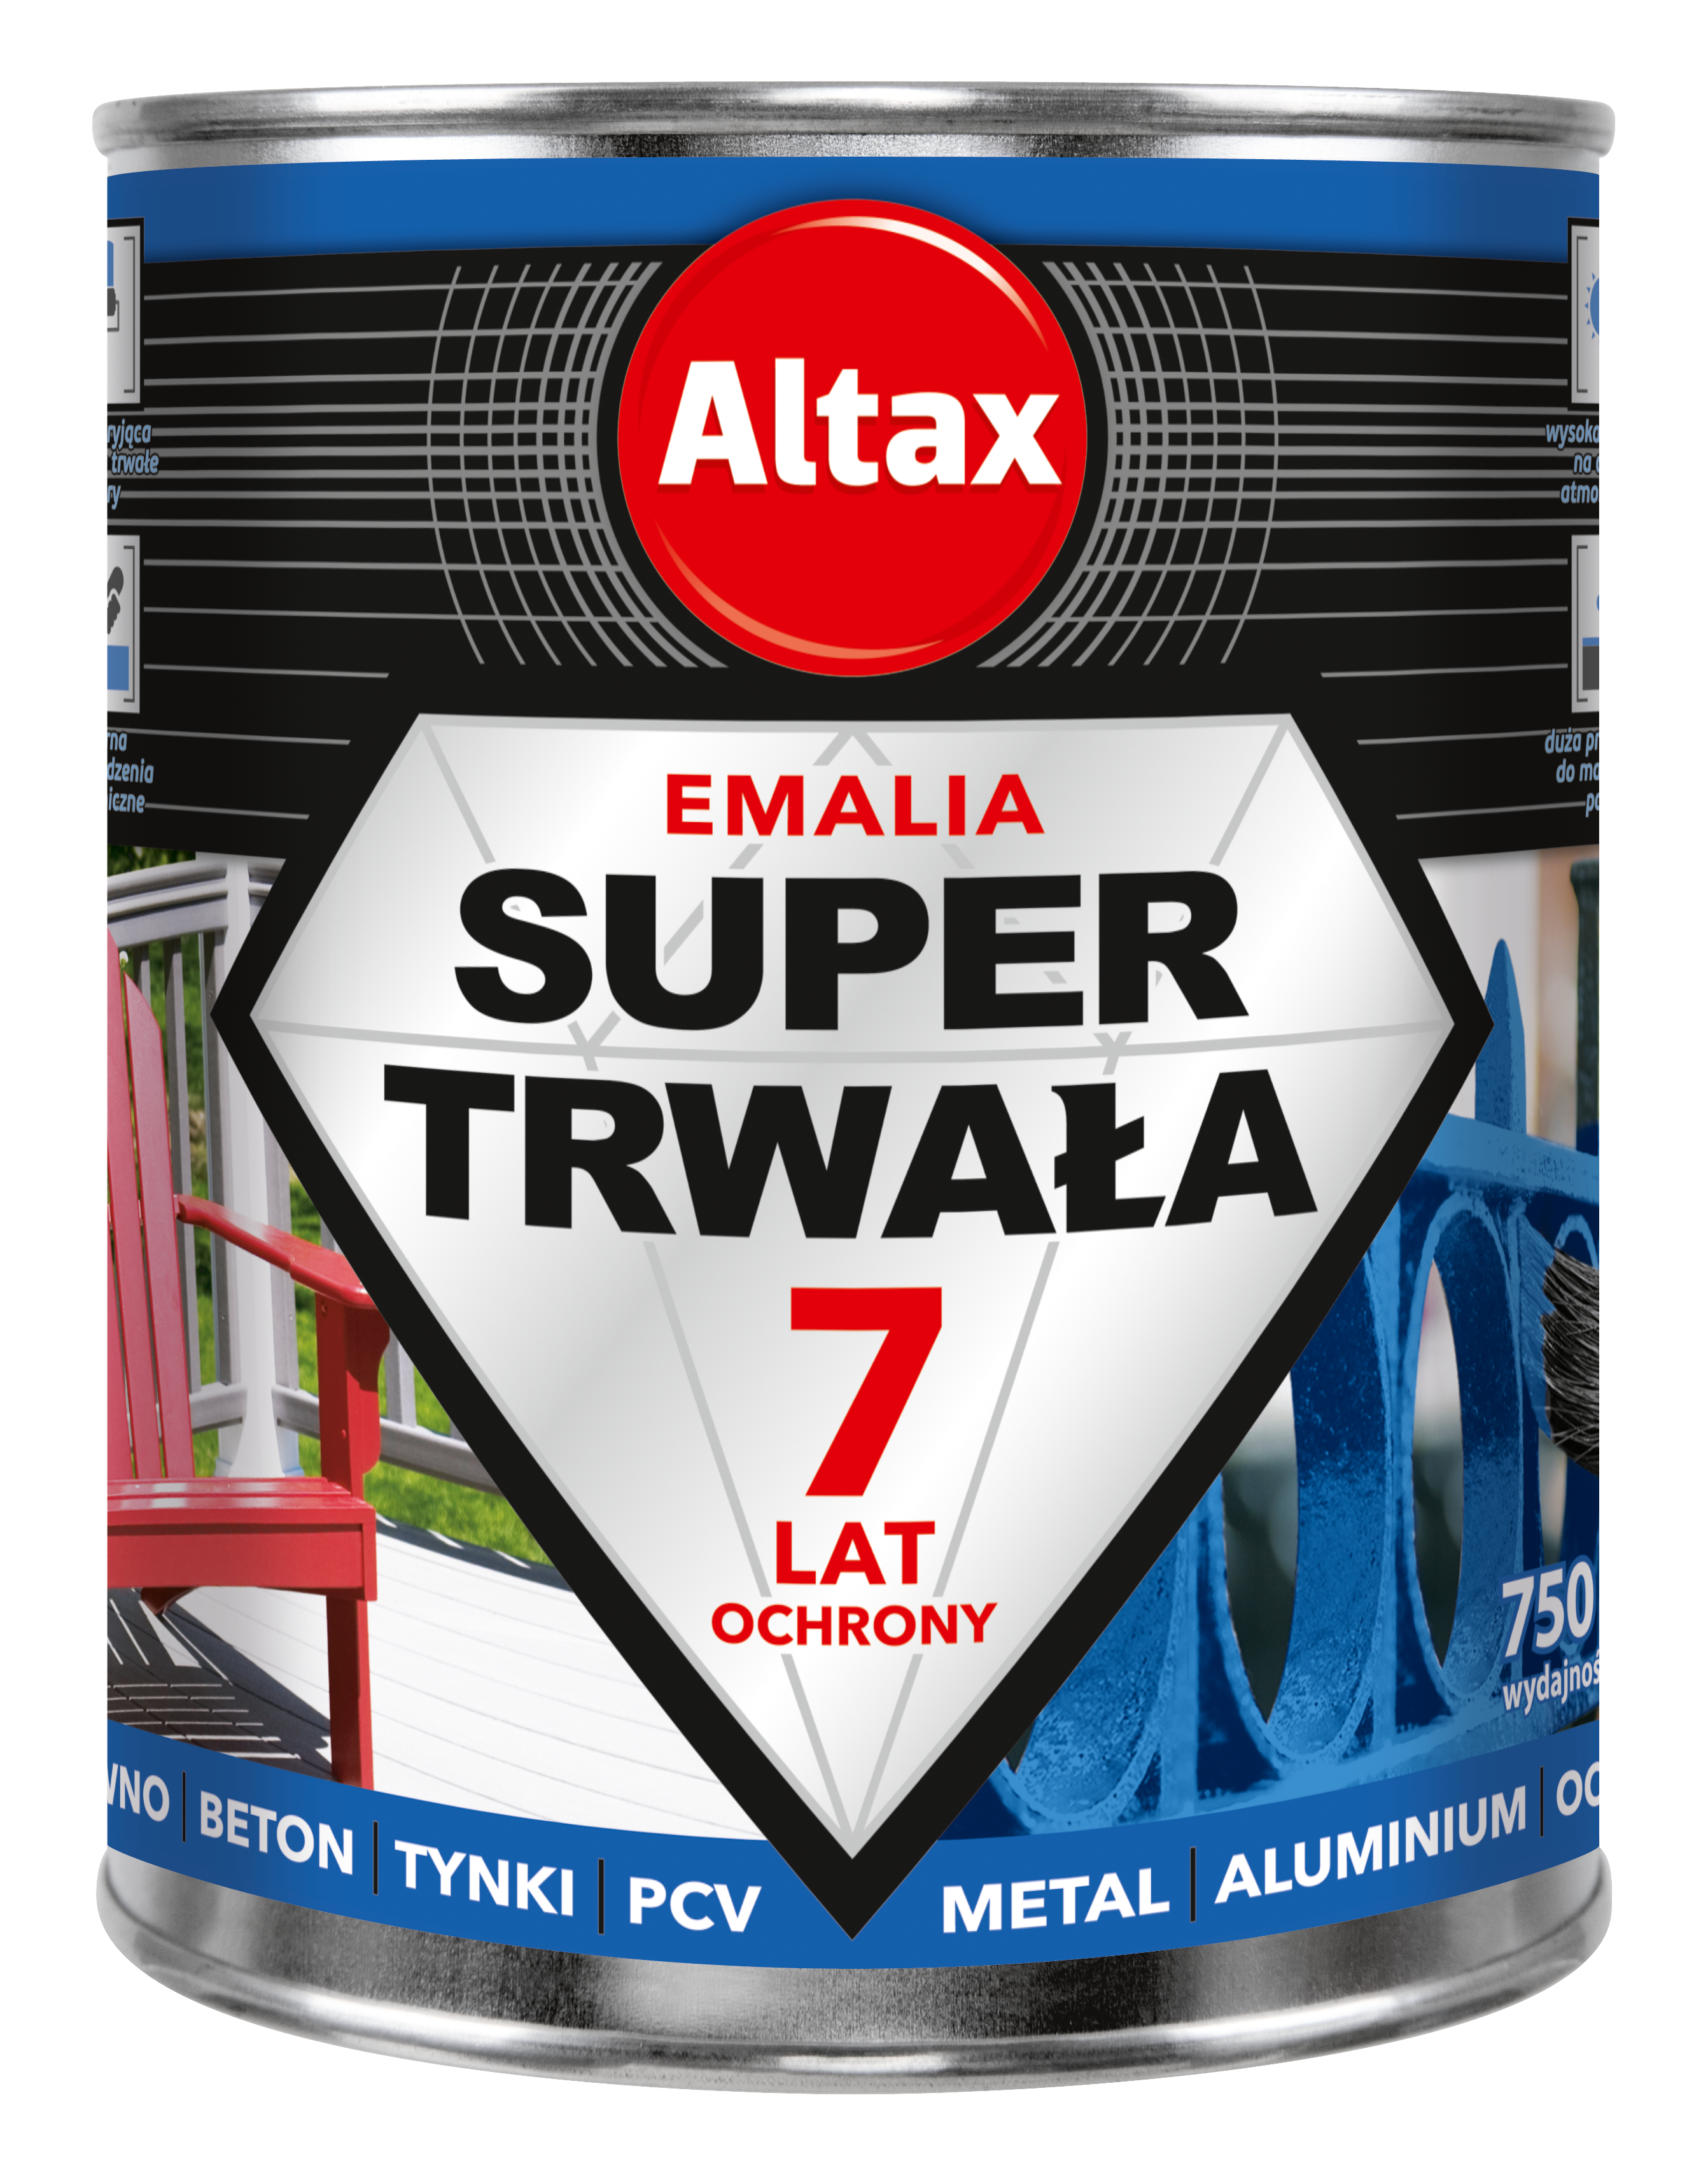 Altax_emalia_supertrwala_750ml_P